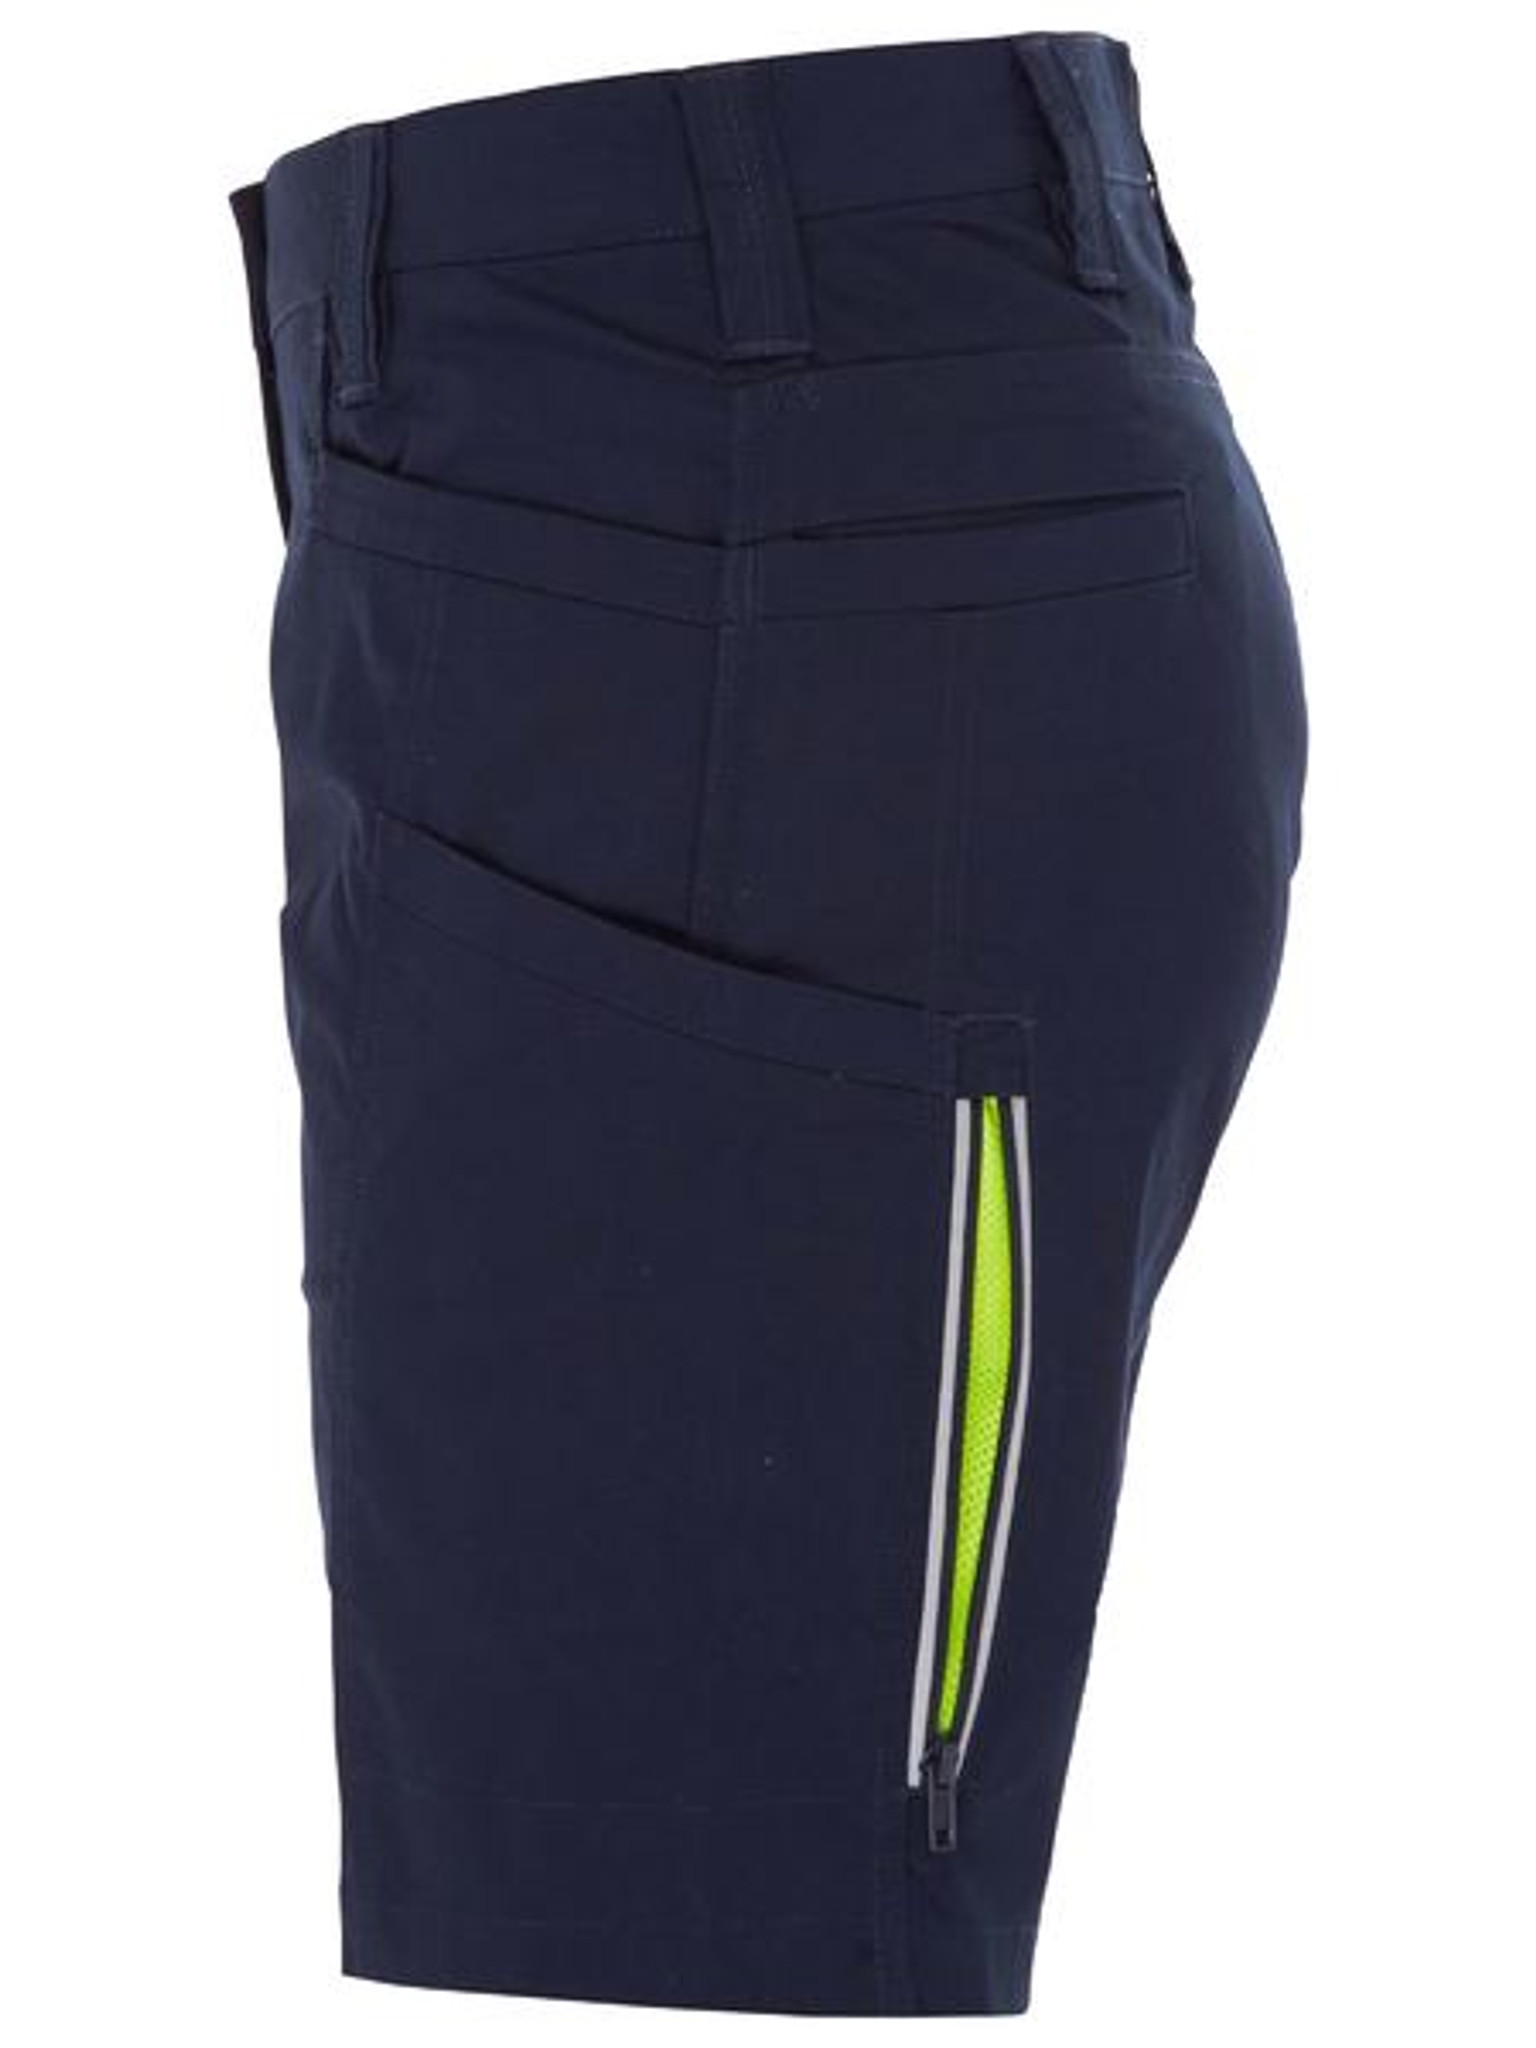 Reflex Women's Cargo Stretch Ripstop Shorts